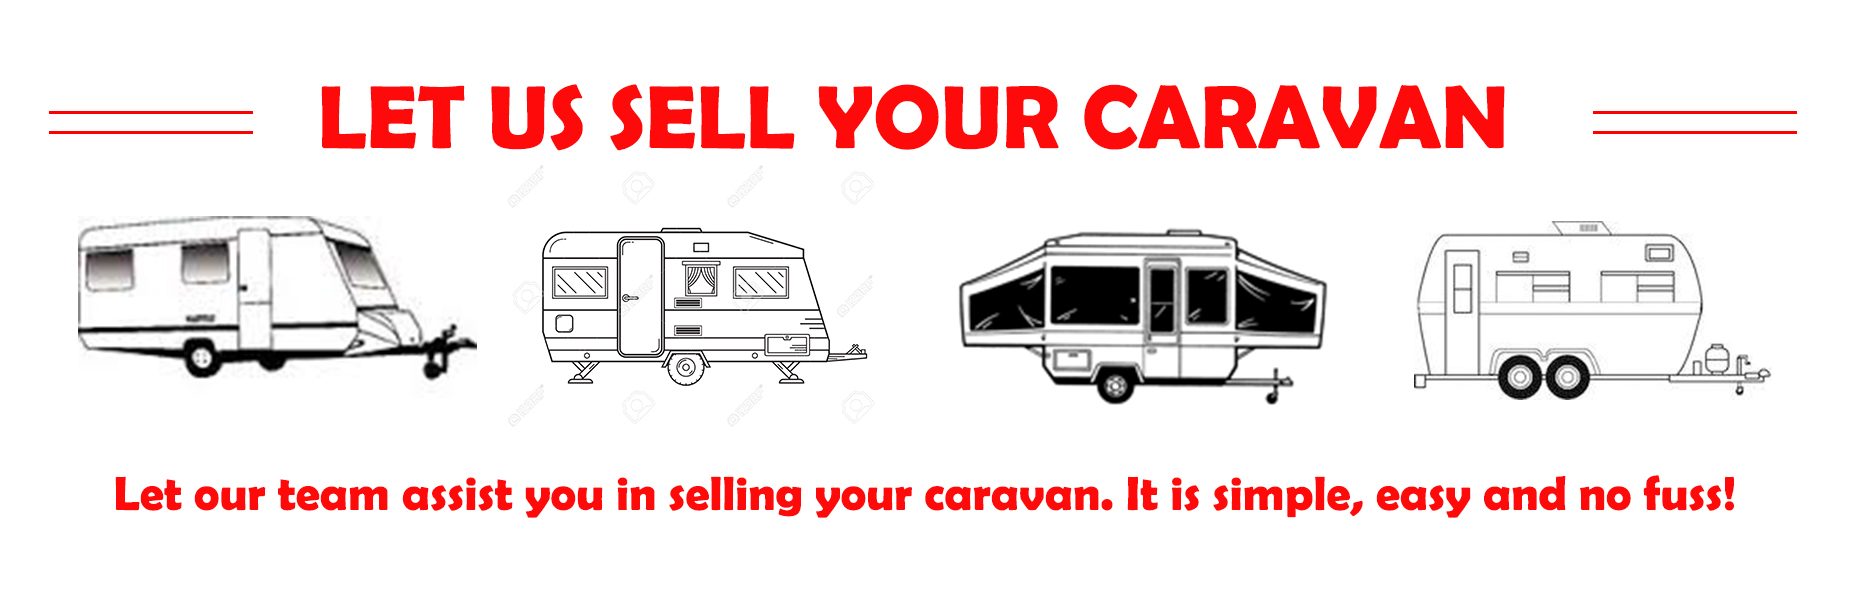 Selling caravan process